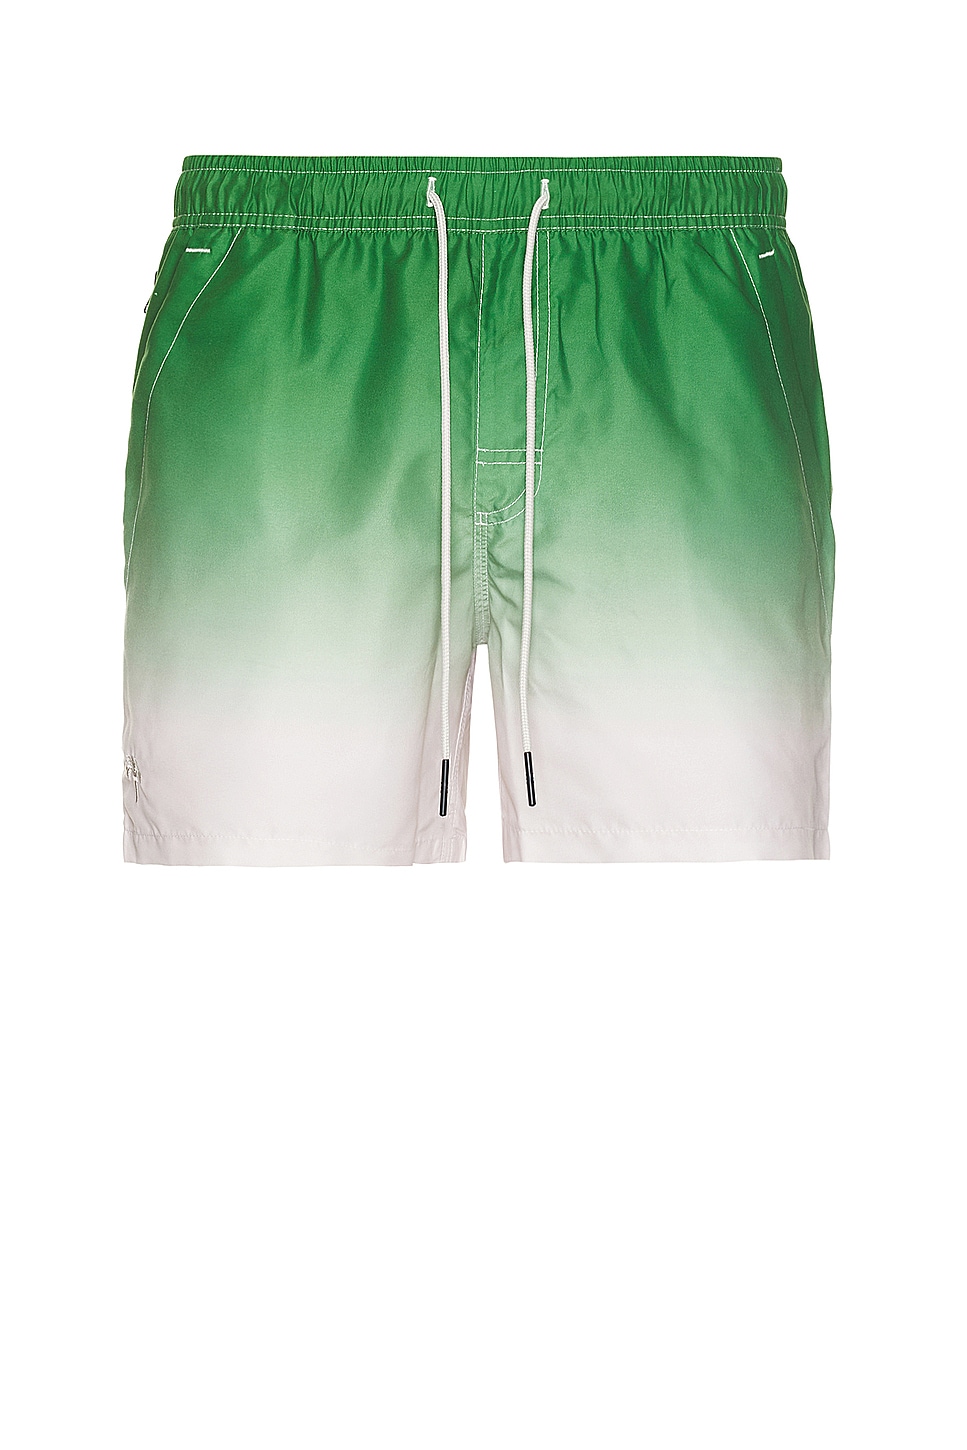 Image 1 of OAS Beach Grade Swim Shorts in Green &White